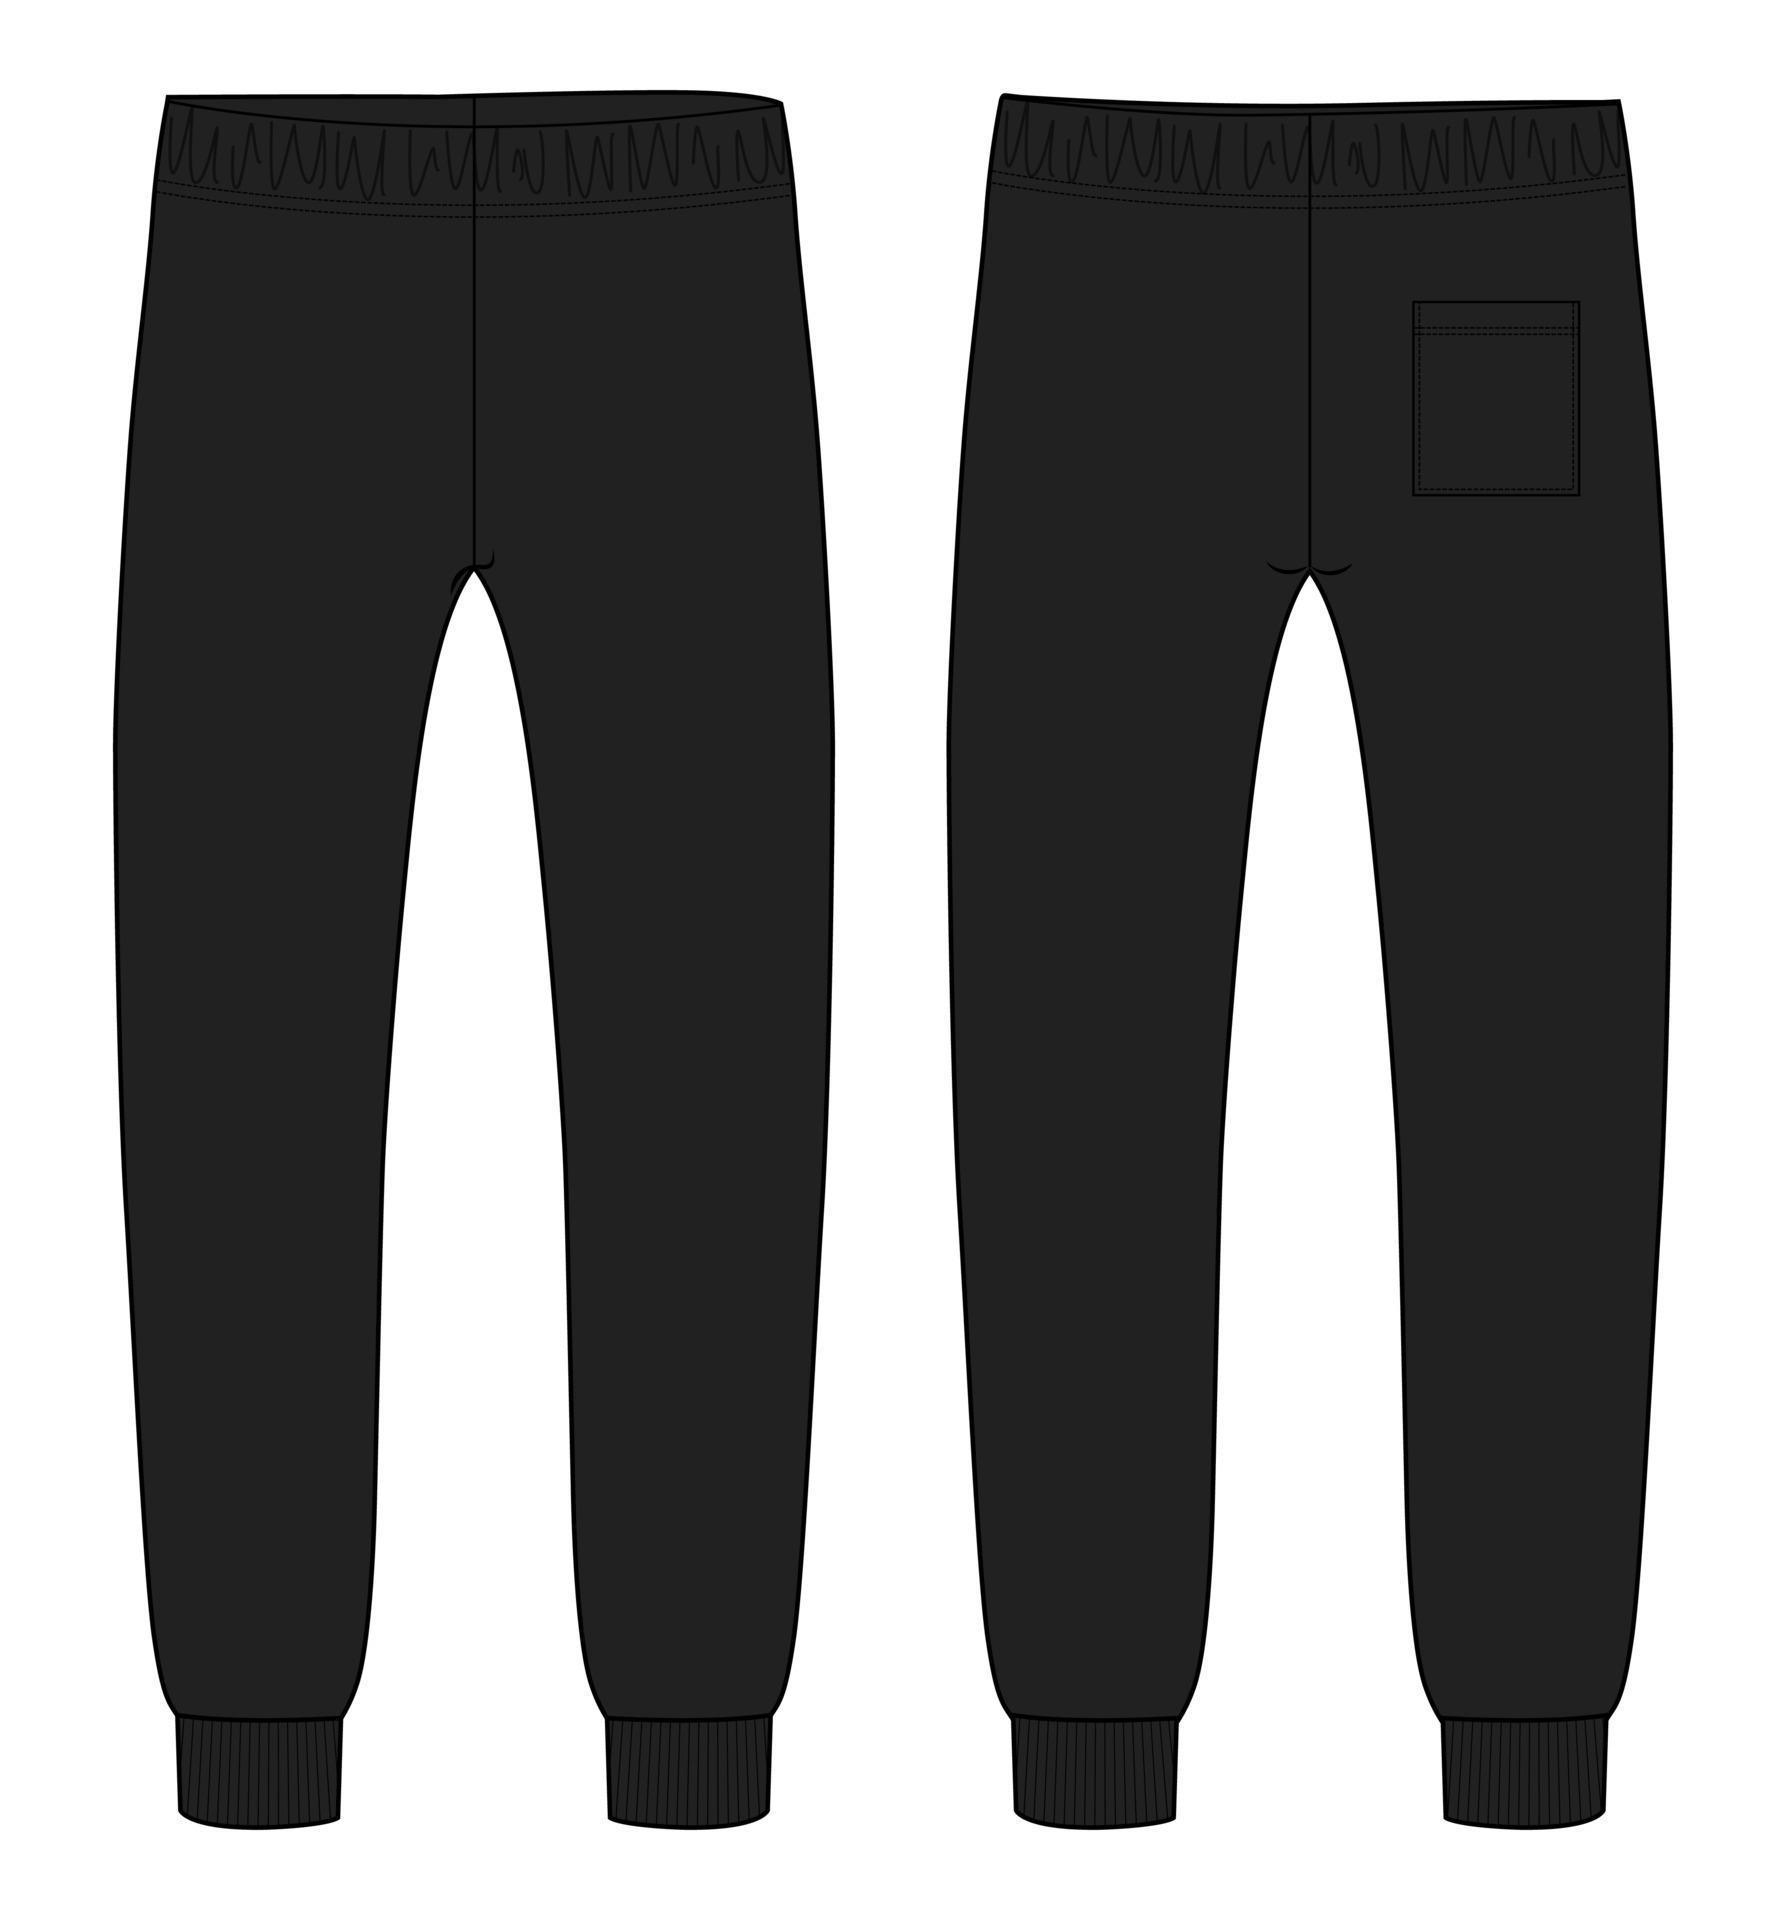 Sweatpants technical fashion flat sketch vector illustration black